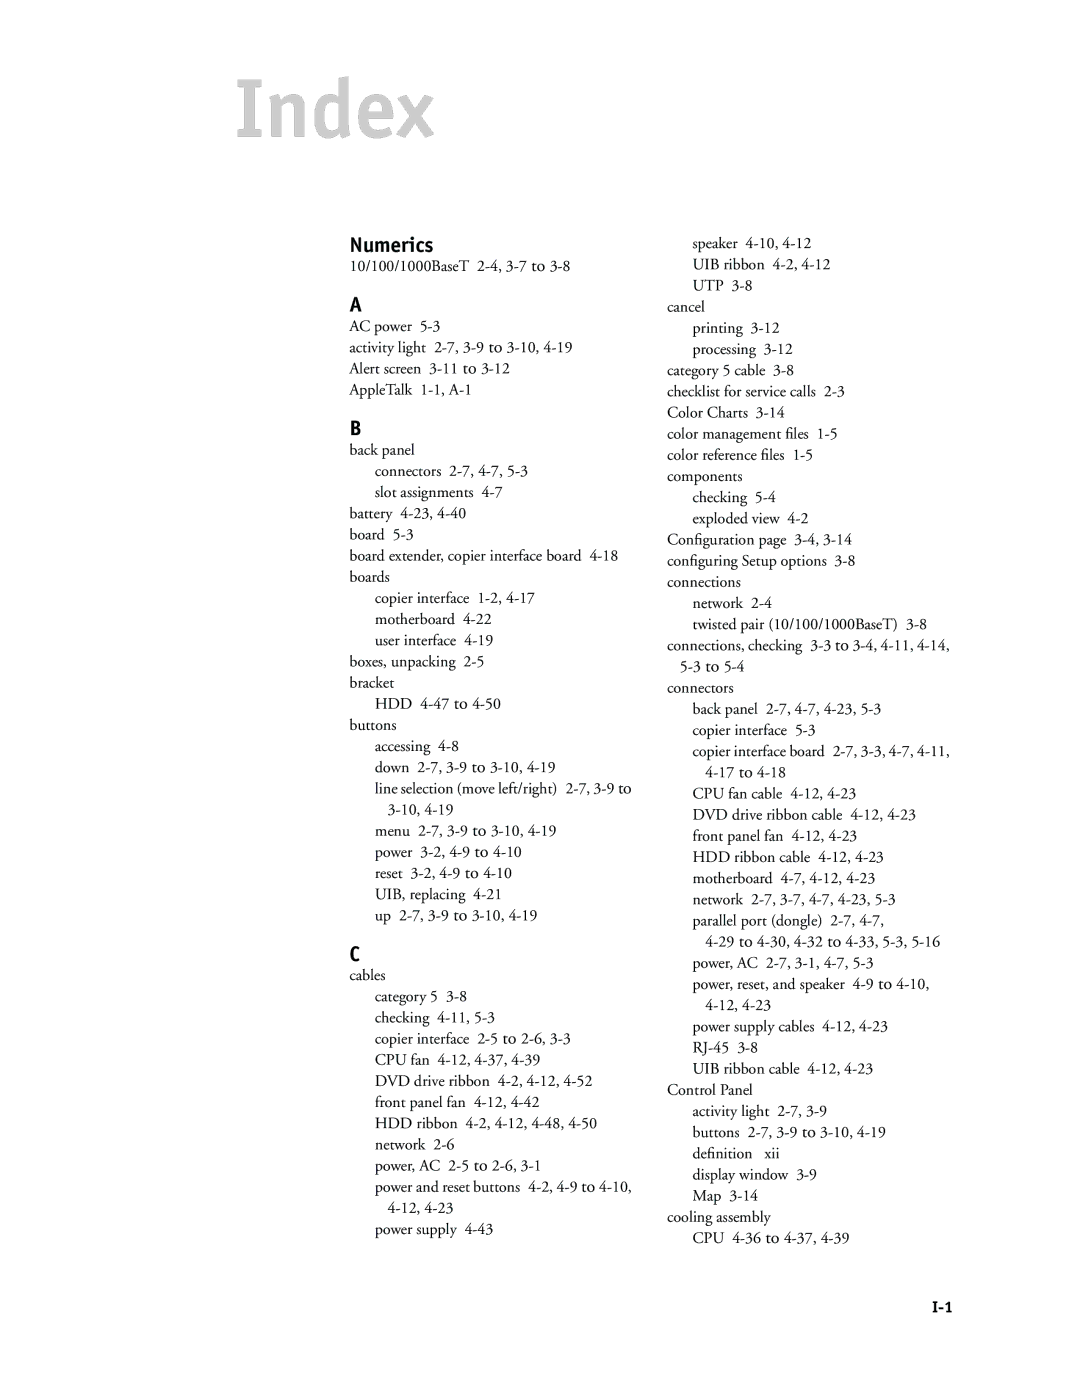 Canon PS-NX6000 manual Index, Numerics 